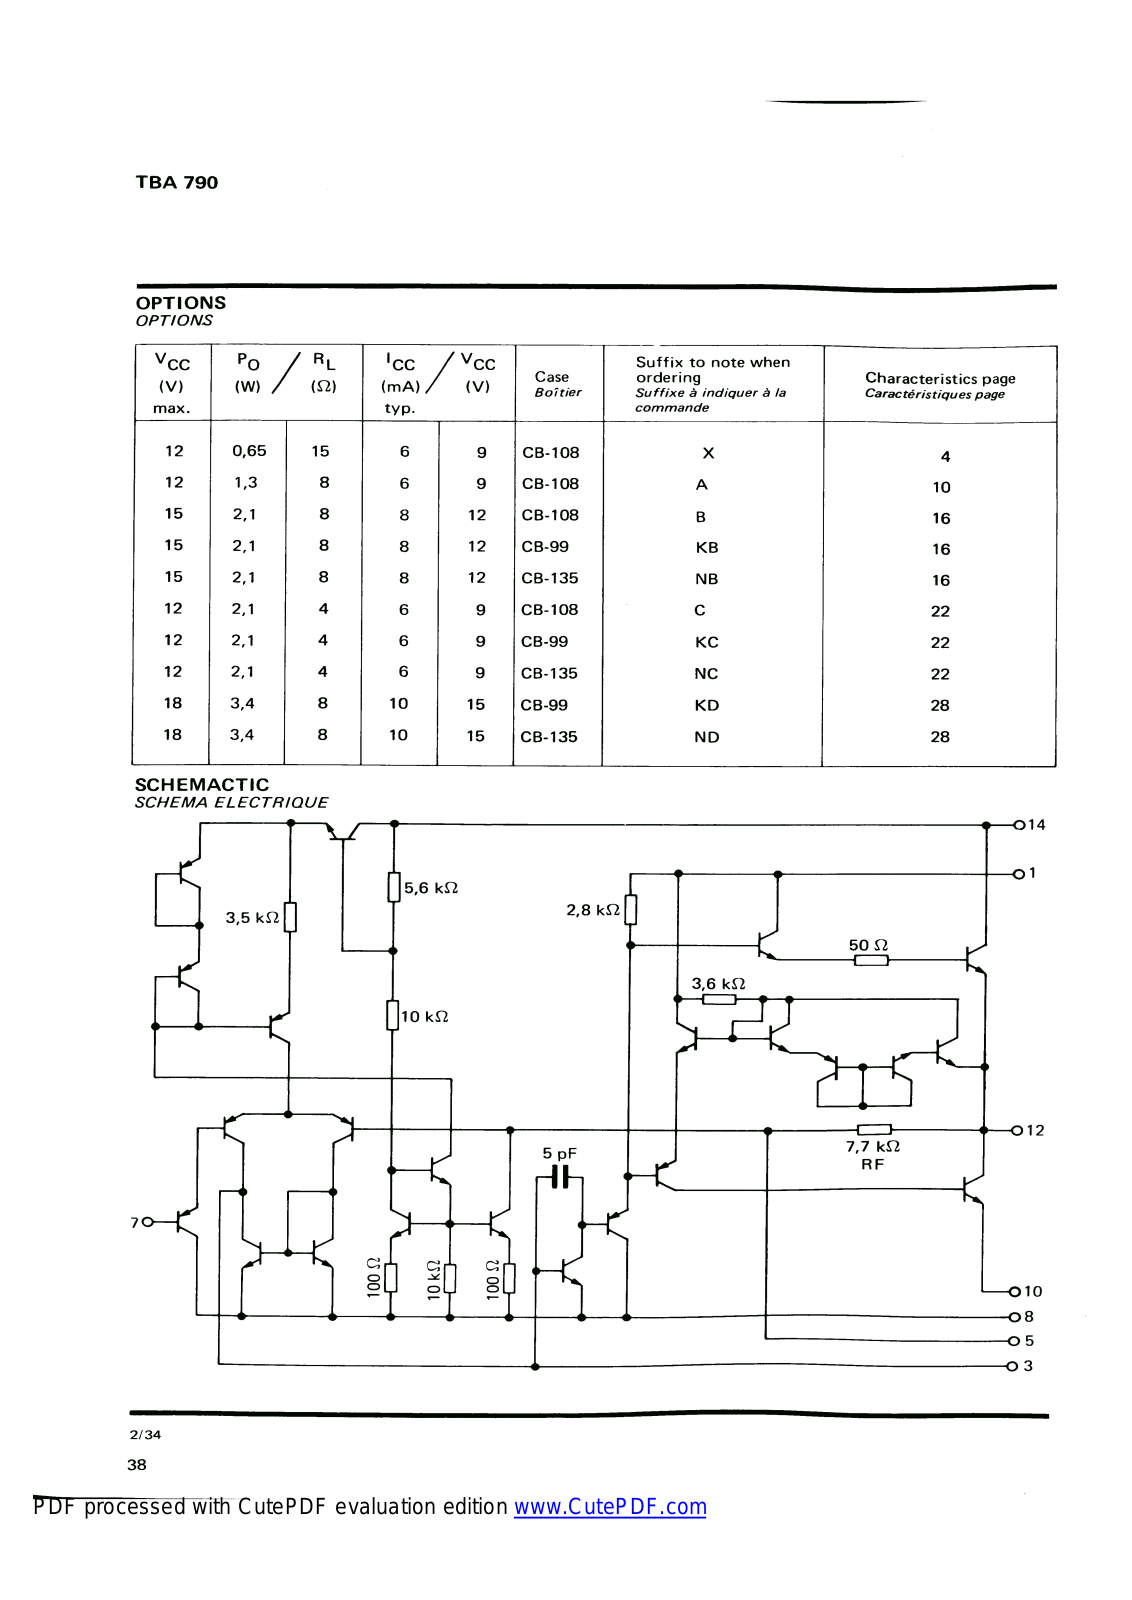 SGS Thomson Microelectronics TBA790 Datasheet